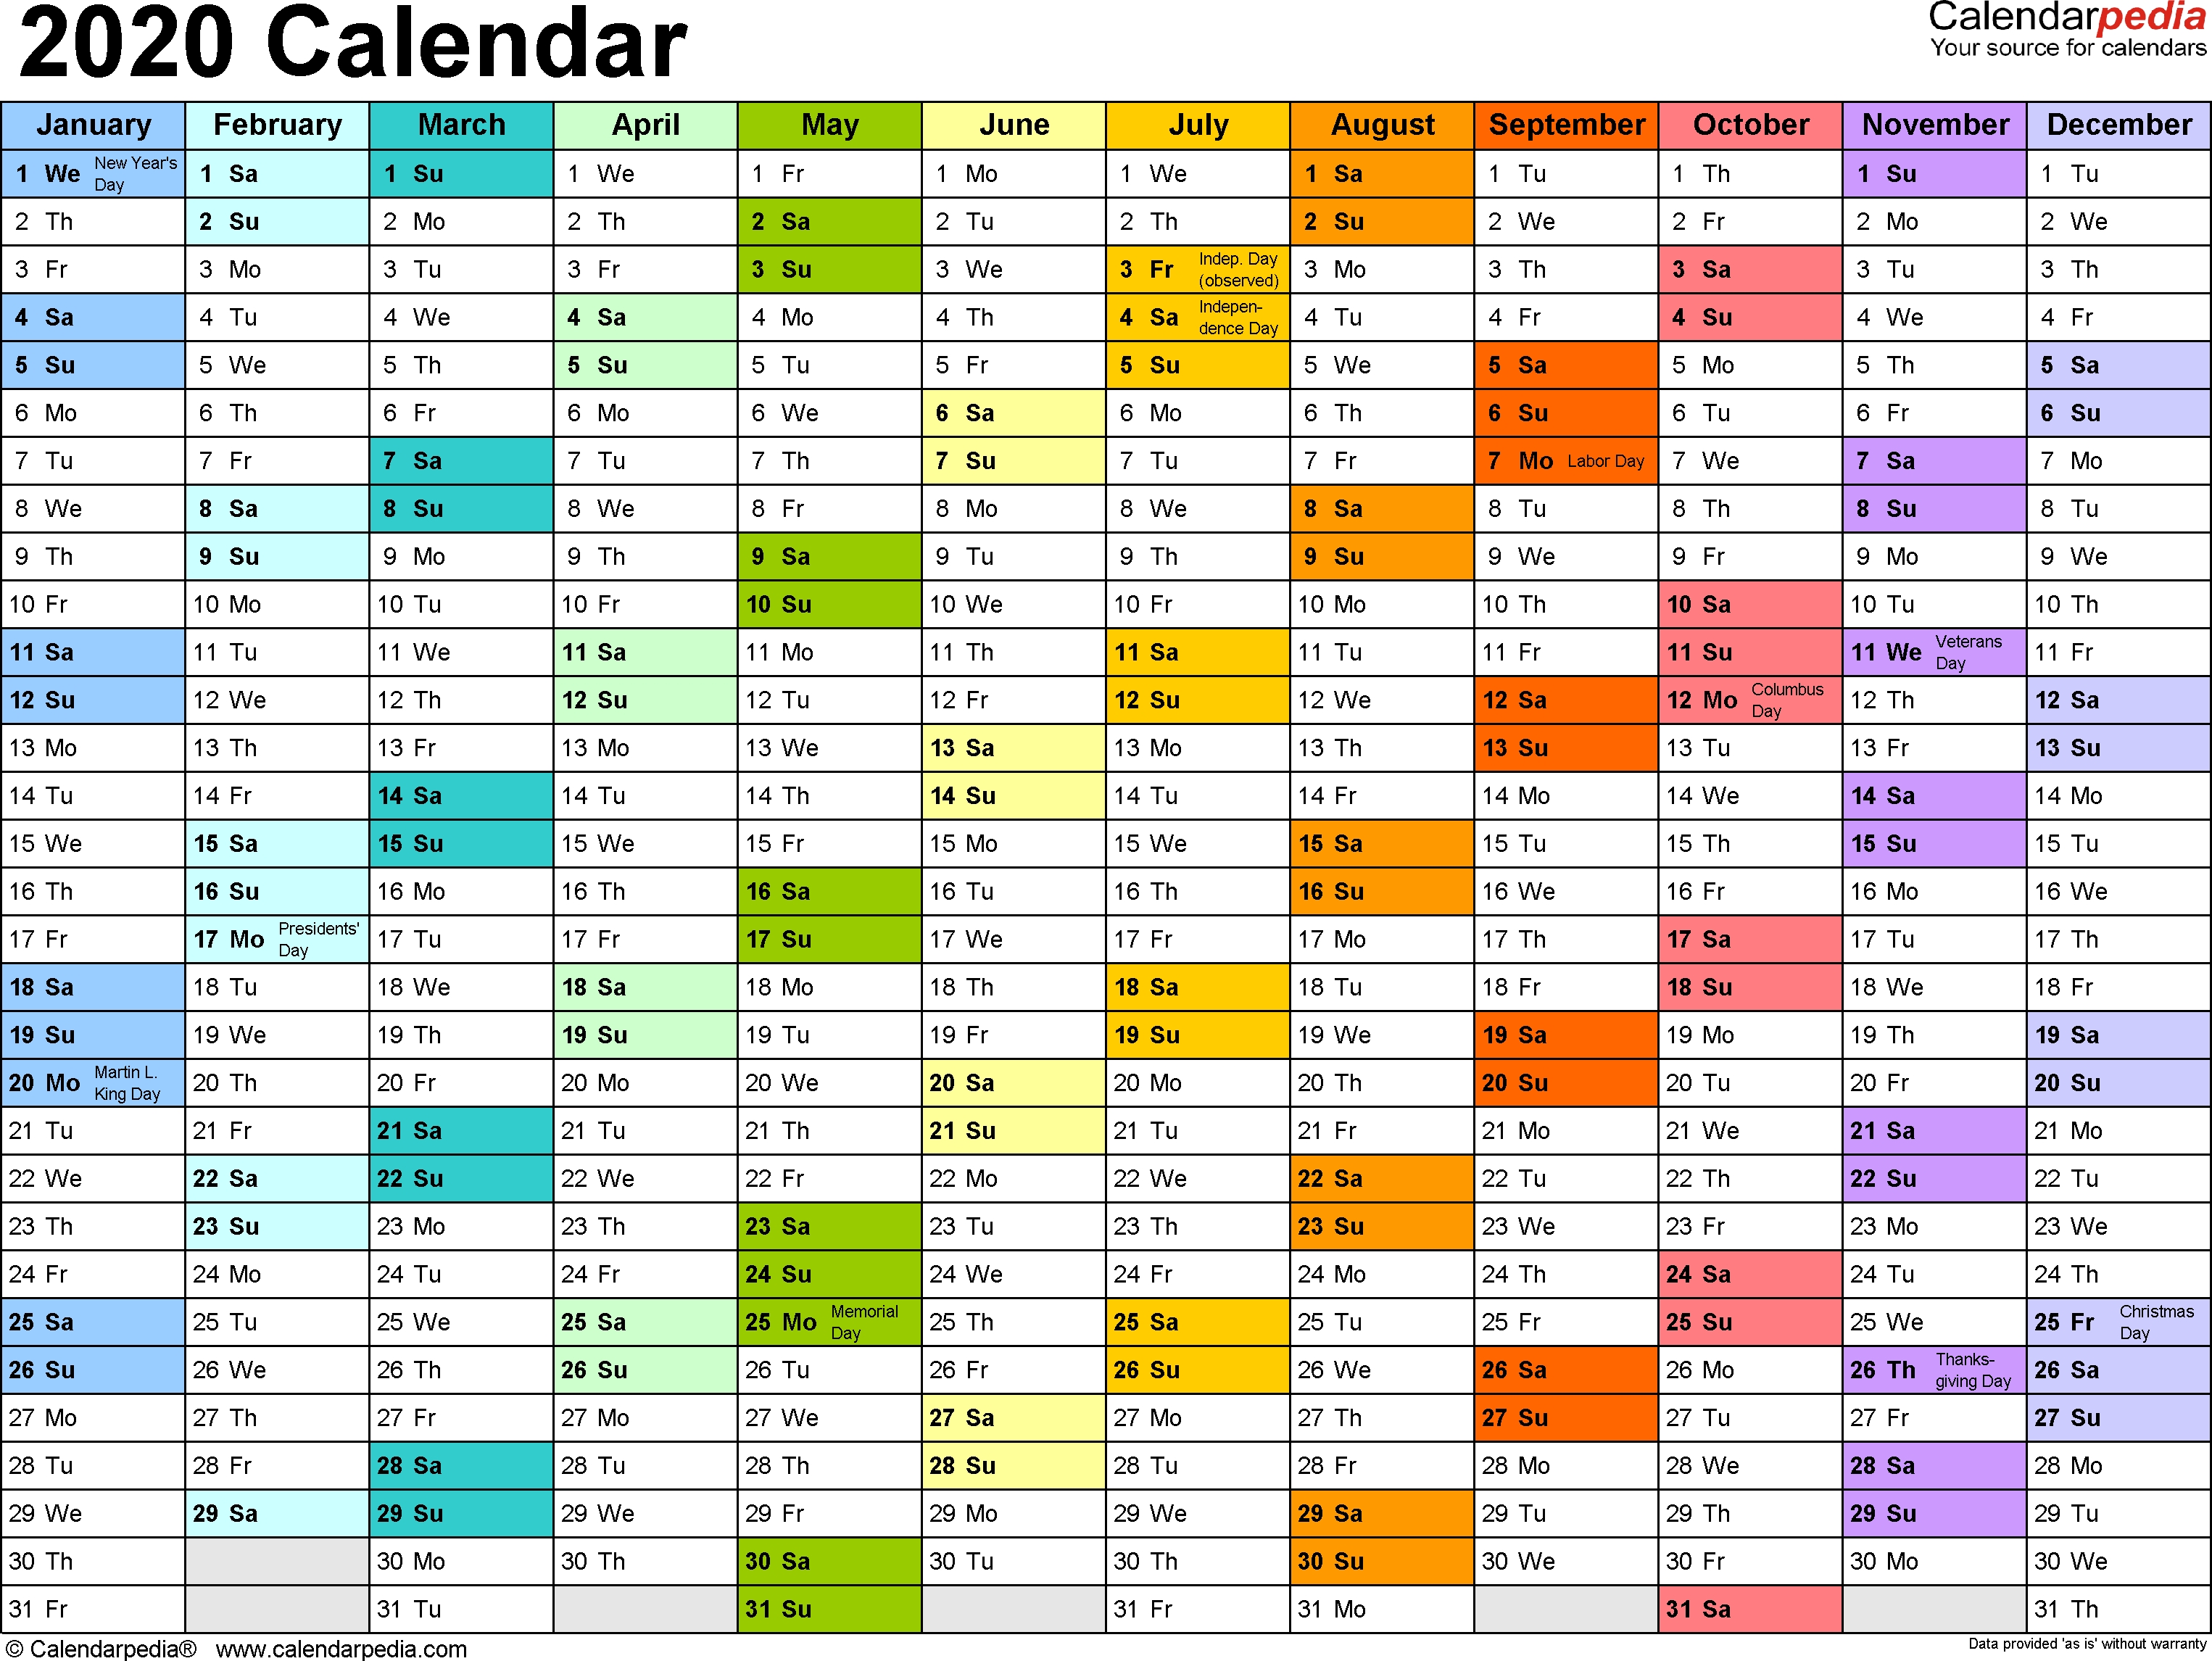 2020 Calendar Pdf - 18 Free Printable Calendar Templates